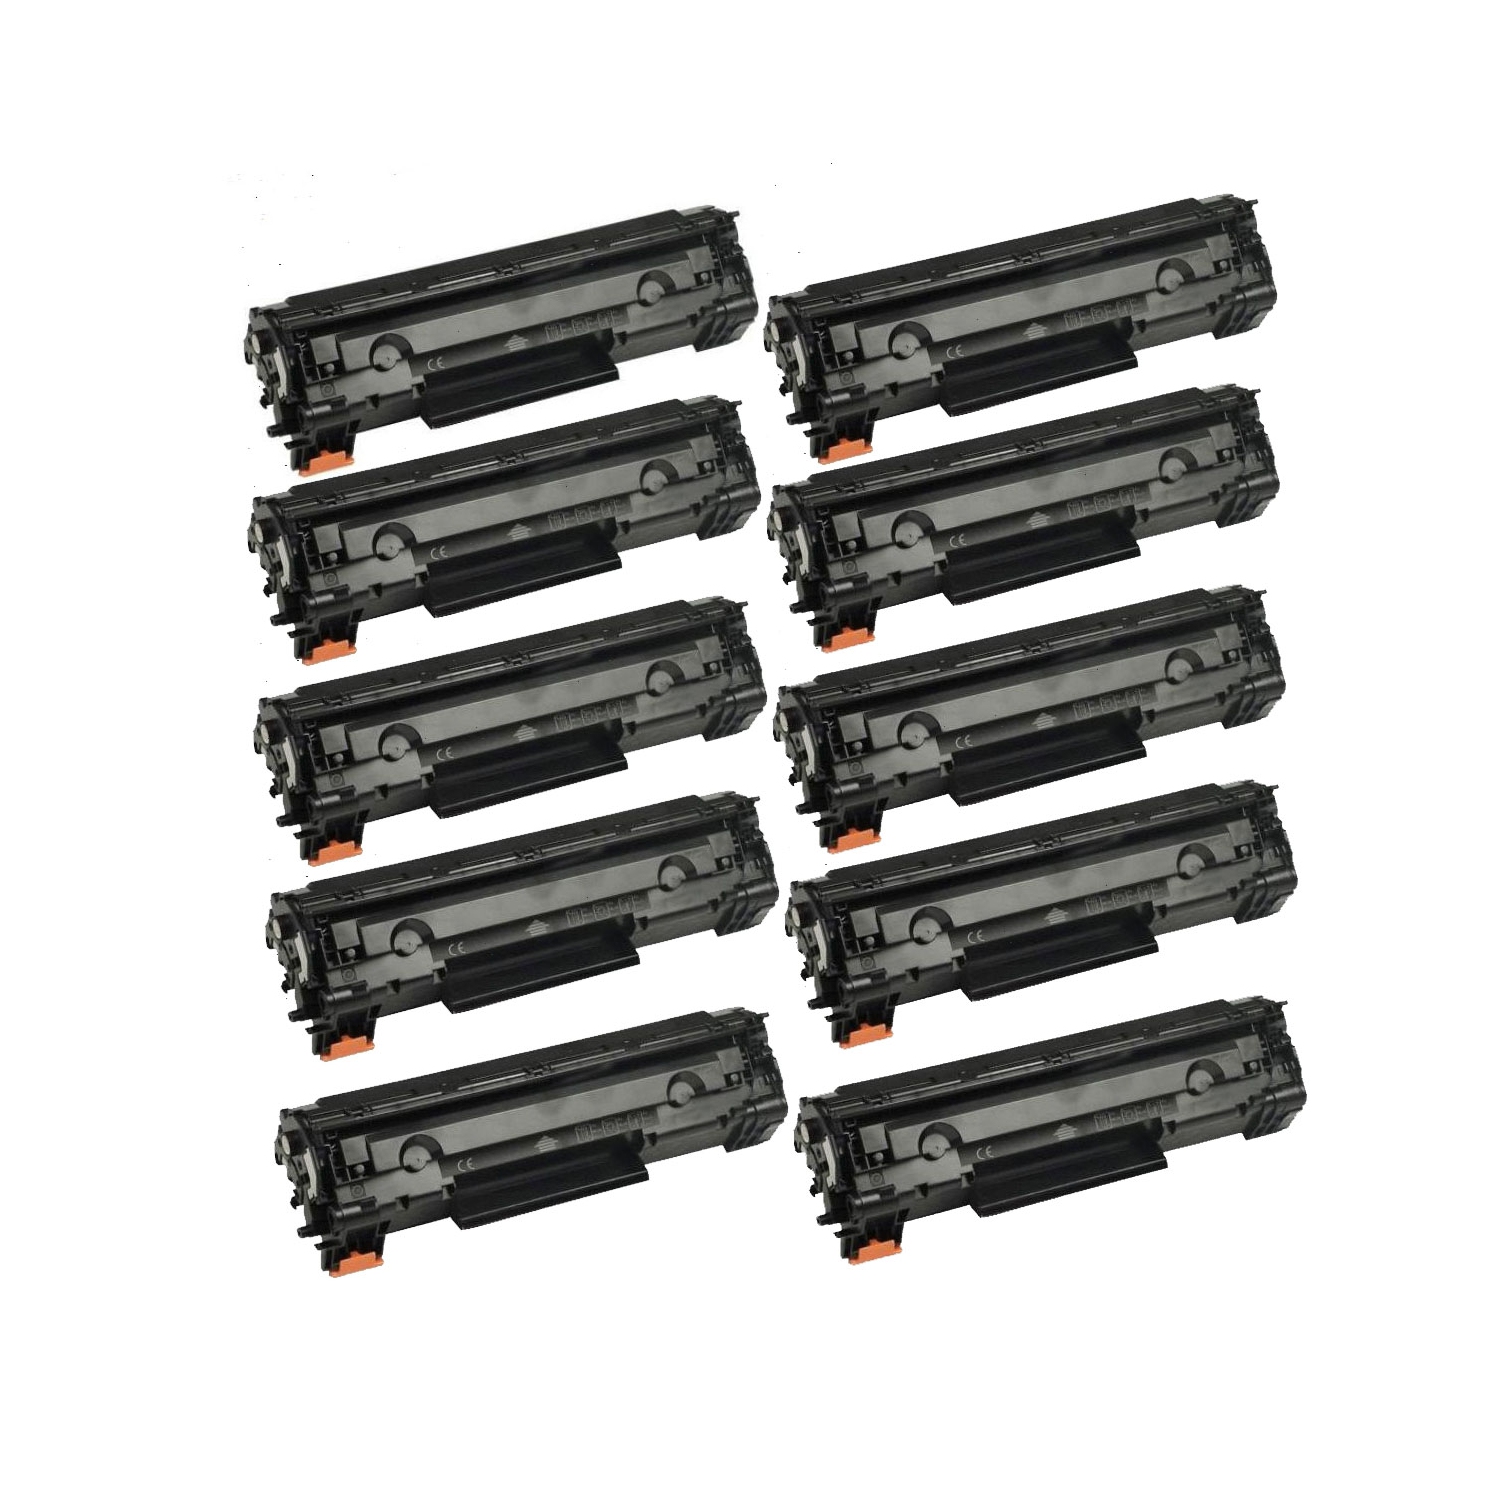 10 Pack CF283A Compatible Toner Cartridges for HP 83A 83A LaserJet Pro MFP M127fn, MFP M127fw, M125nw, M125rnw, M225dn, M201dw, M201n